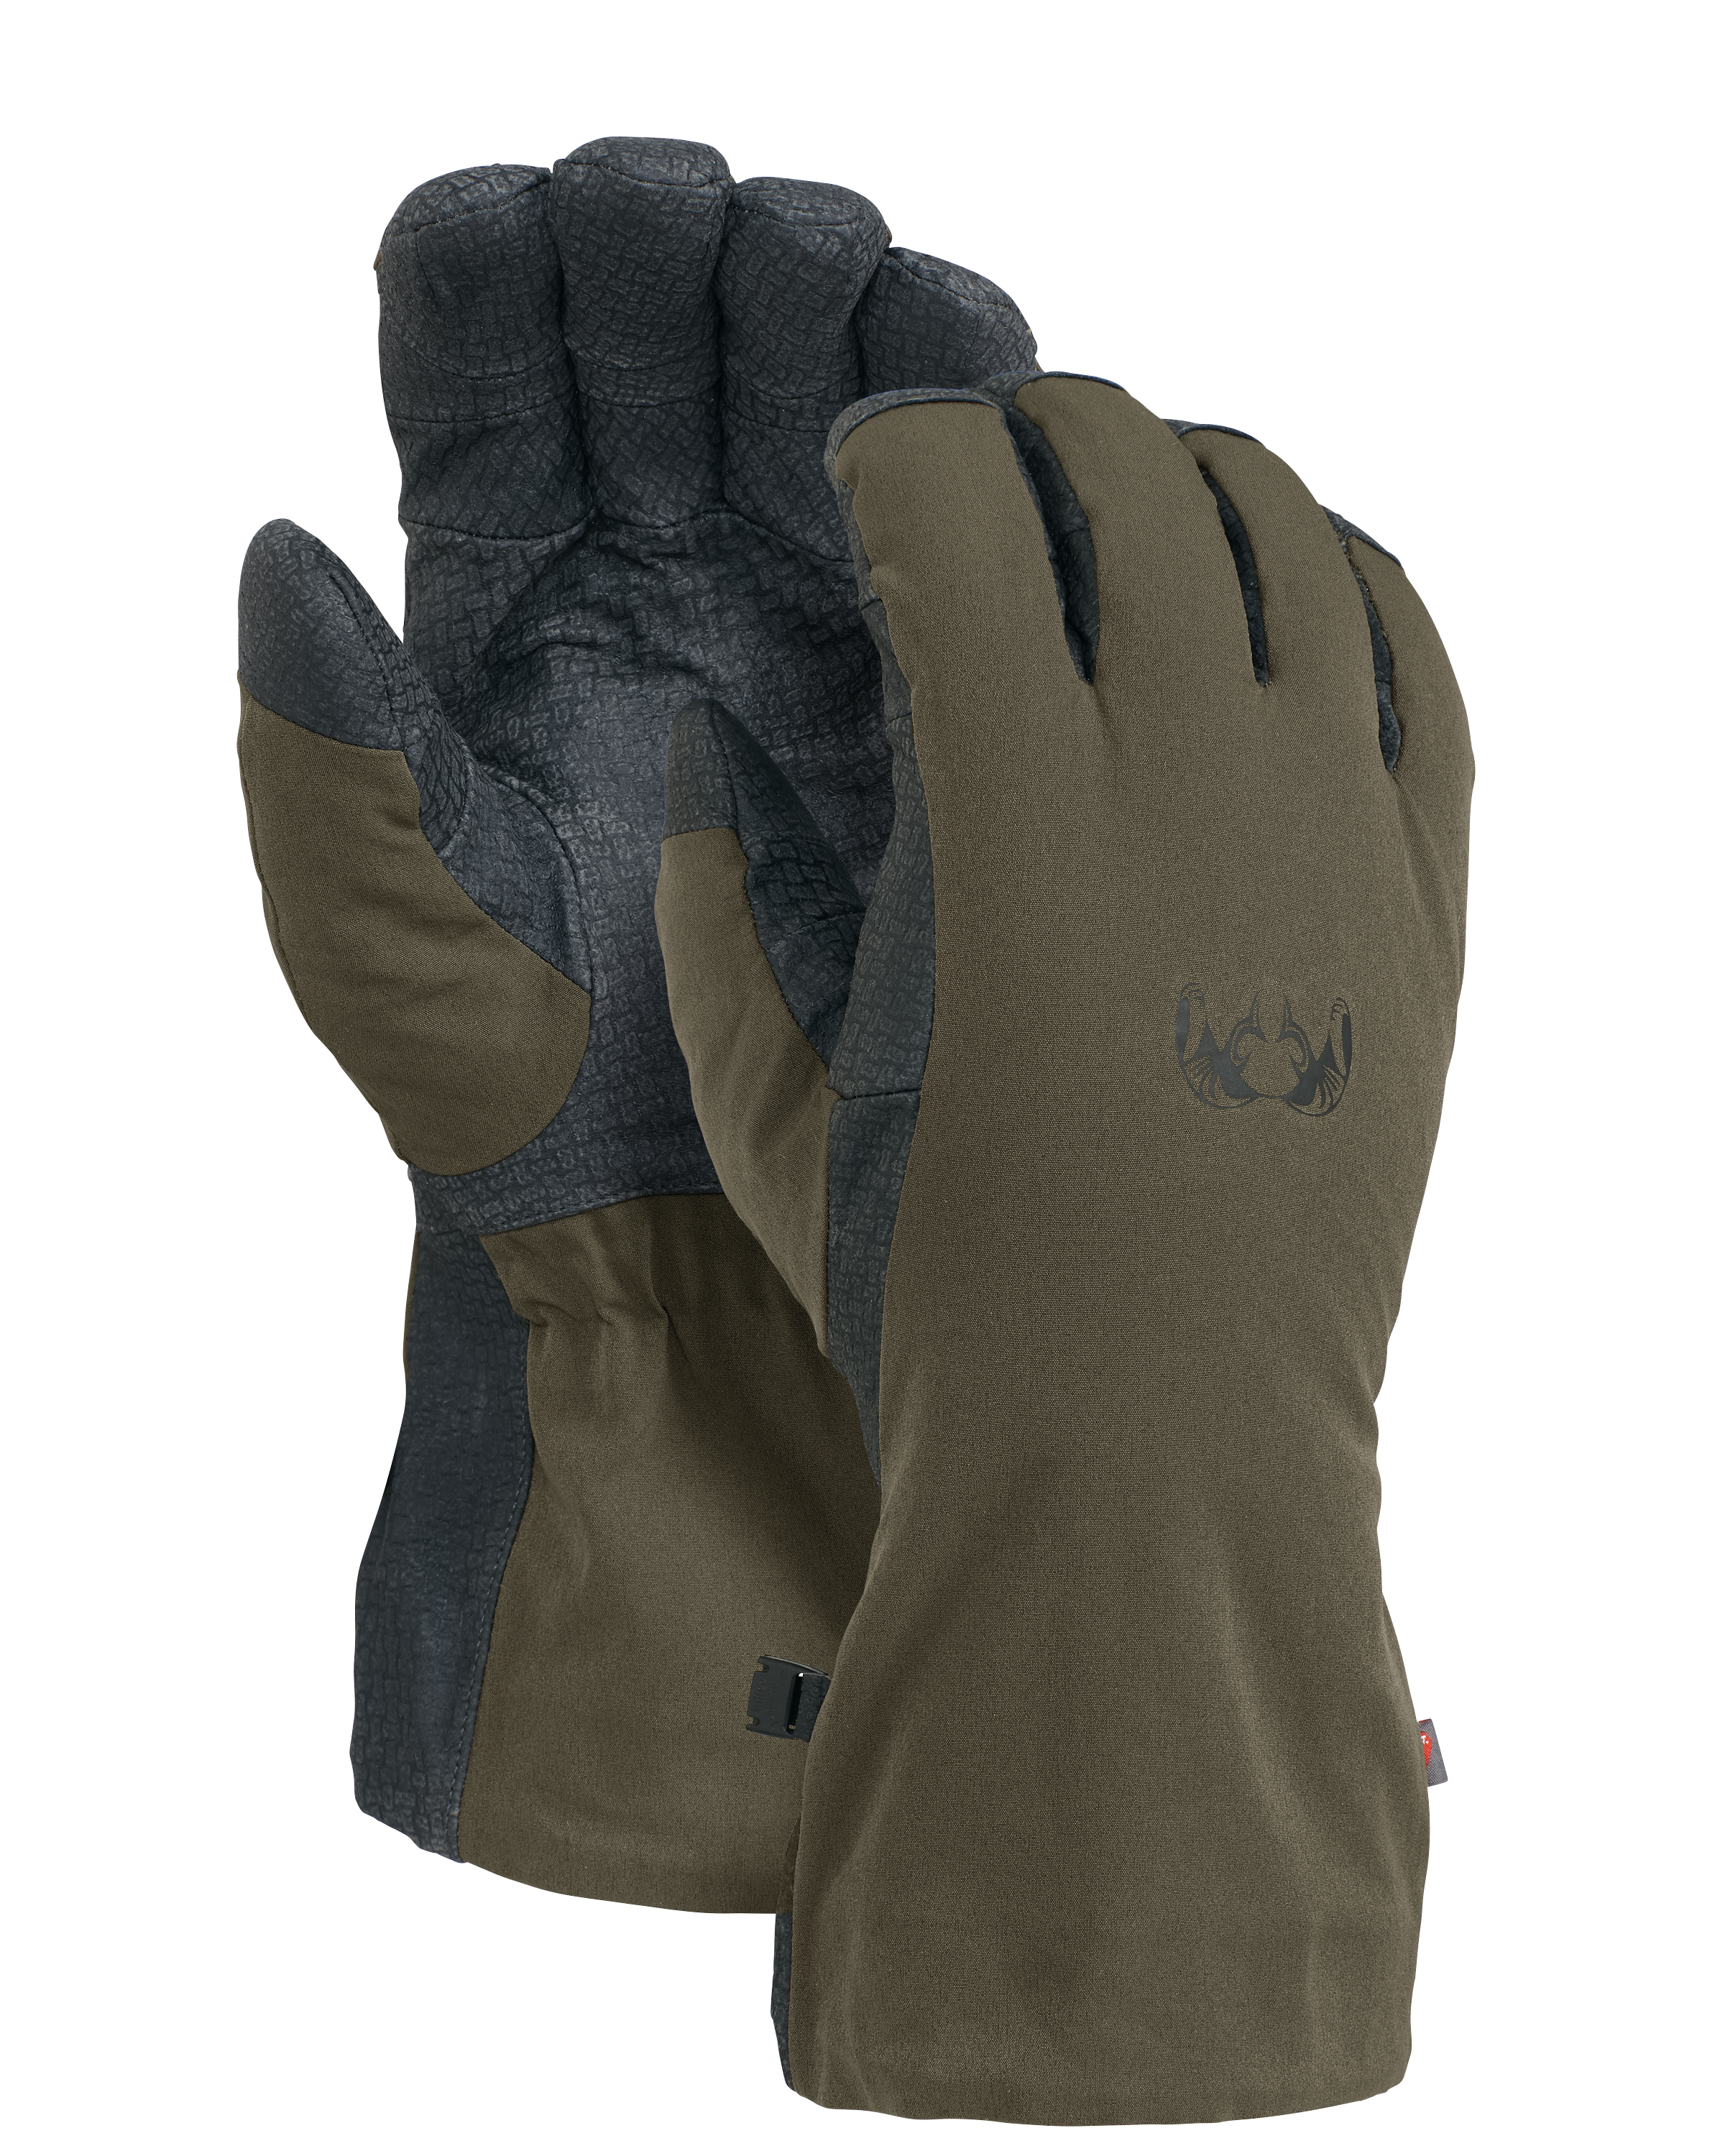 KUIU Northstar Hunting Glove in Ash | Large